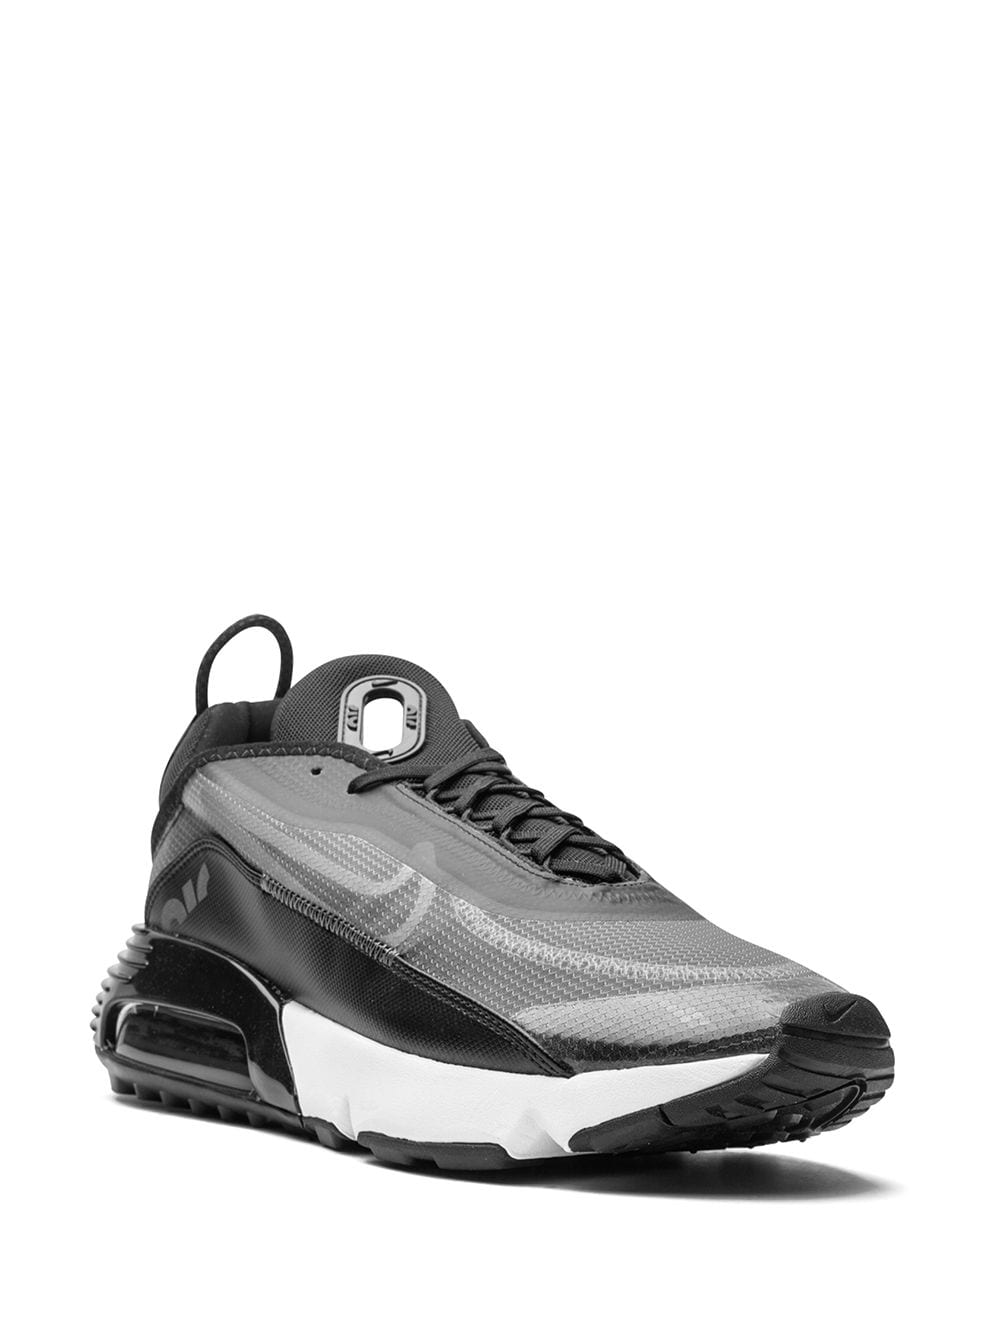 Shop Nike Air Max 2090 "black/wolf Grey" Sneakers